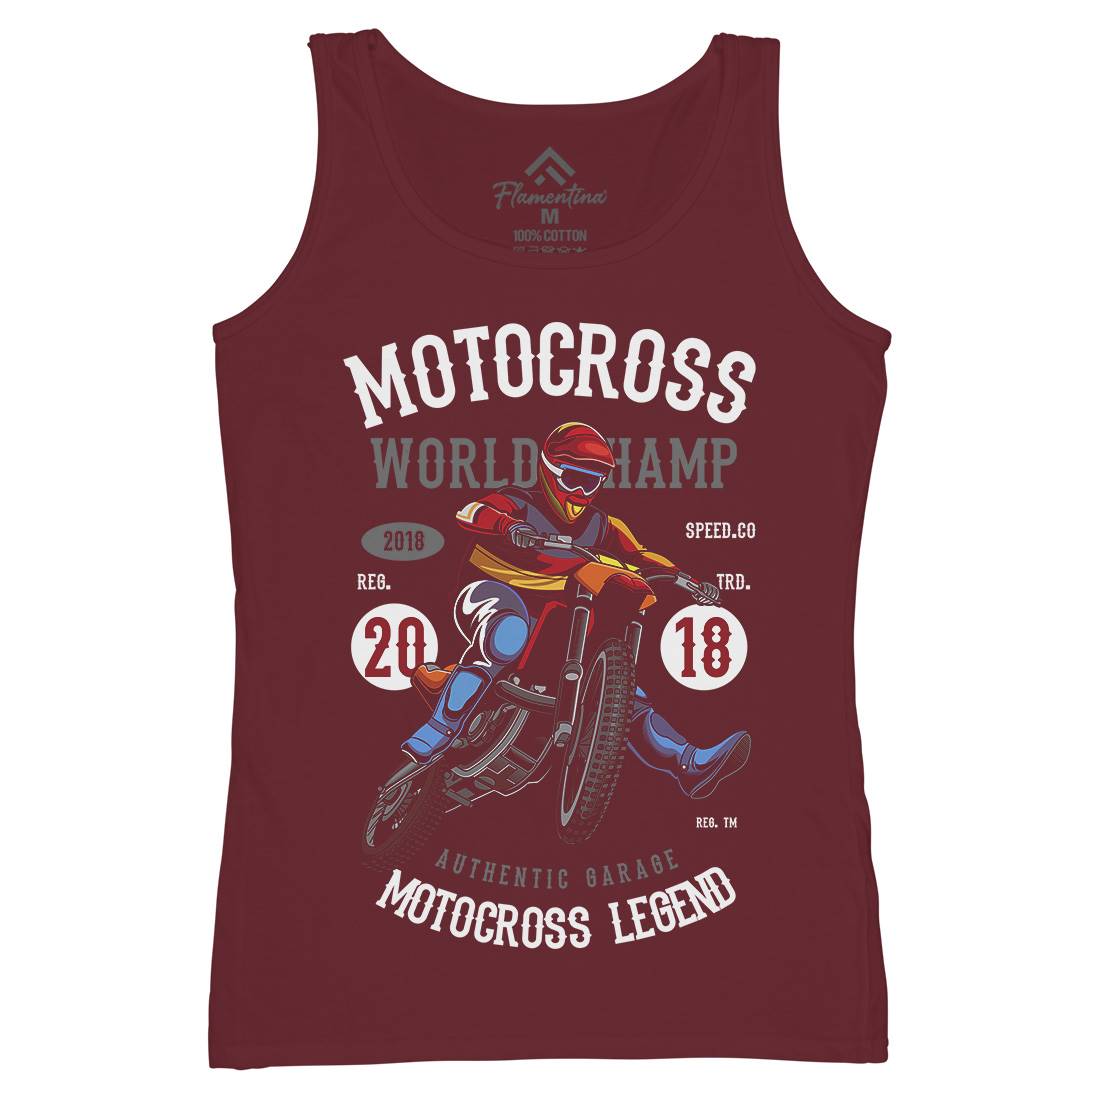 Motocross World Champ Womens Organic Tank Top Vest Motorcycles C398